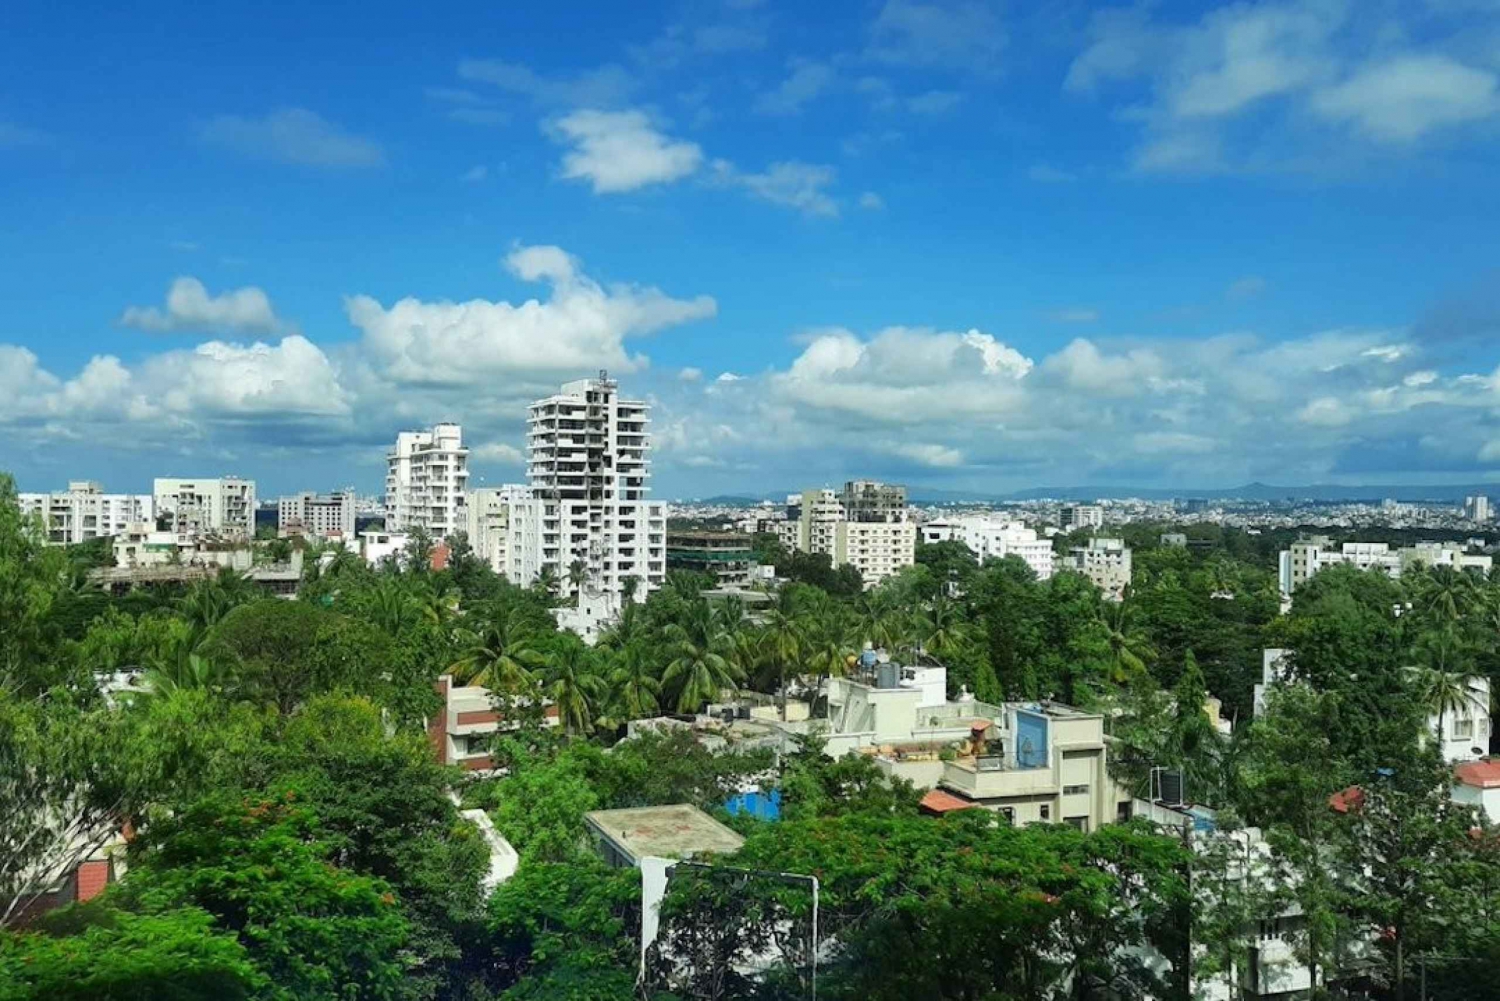 Mumbai-Pune Överföring